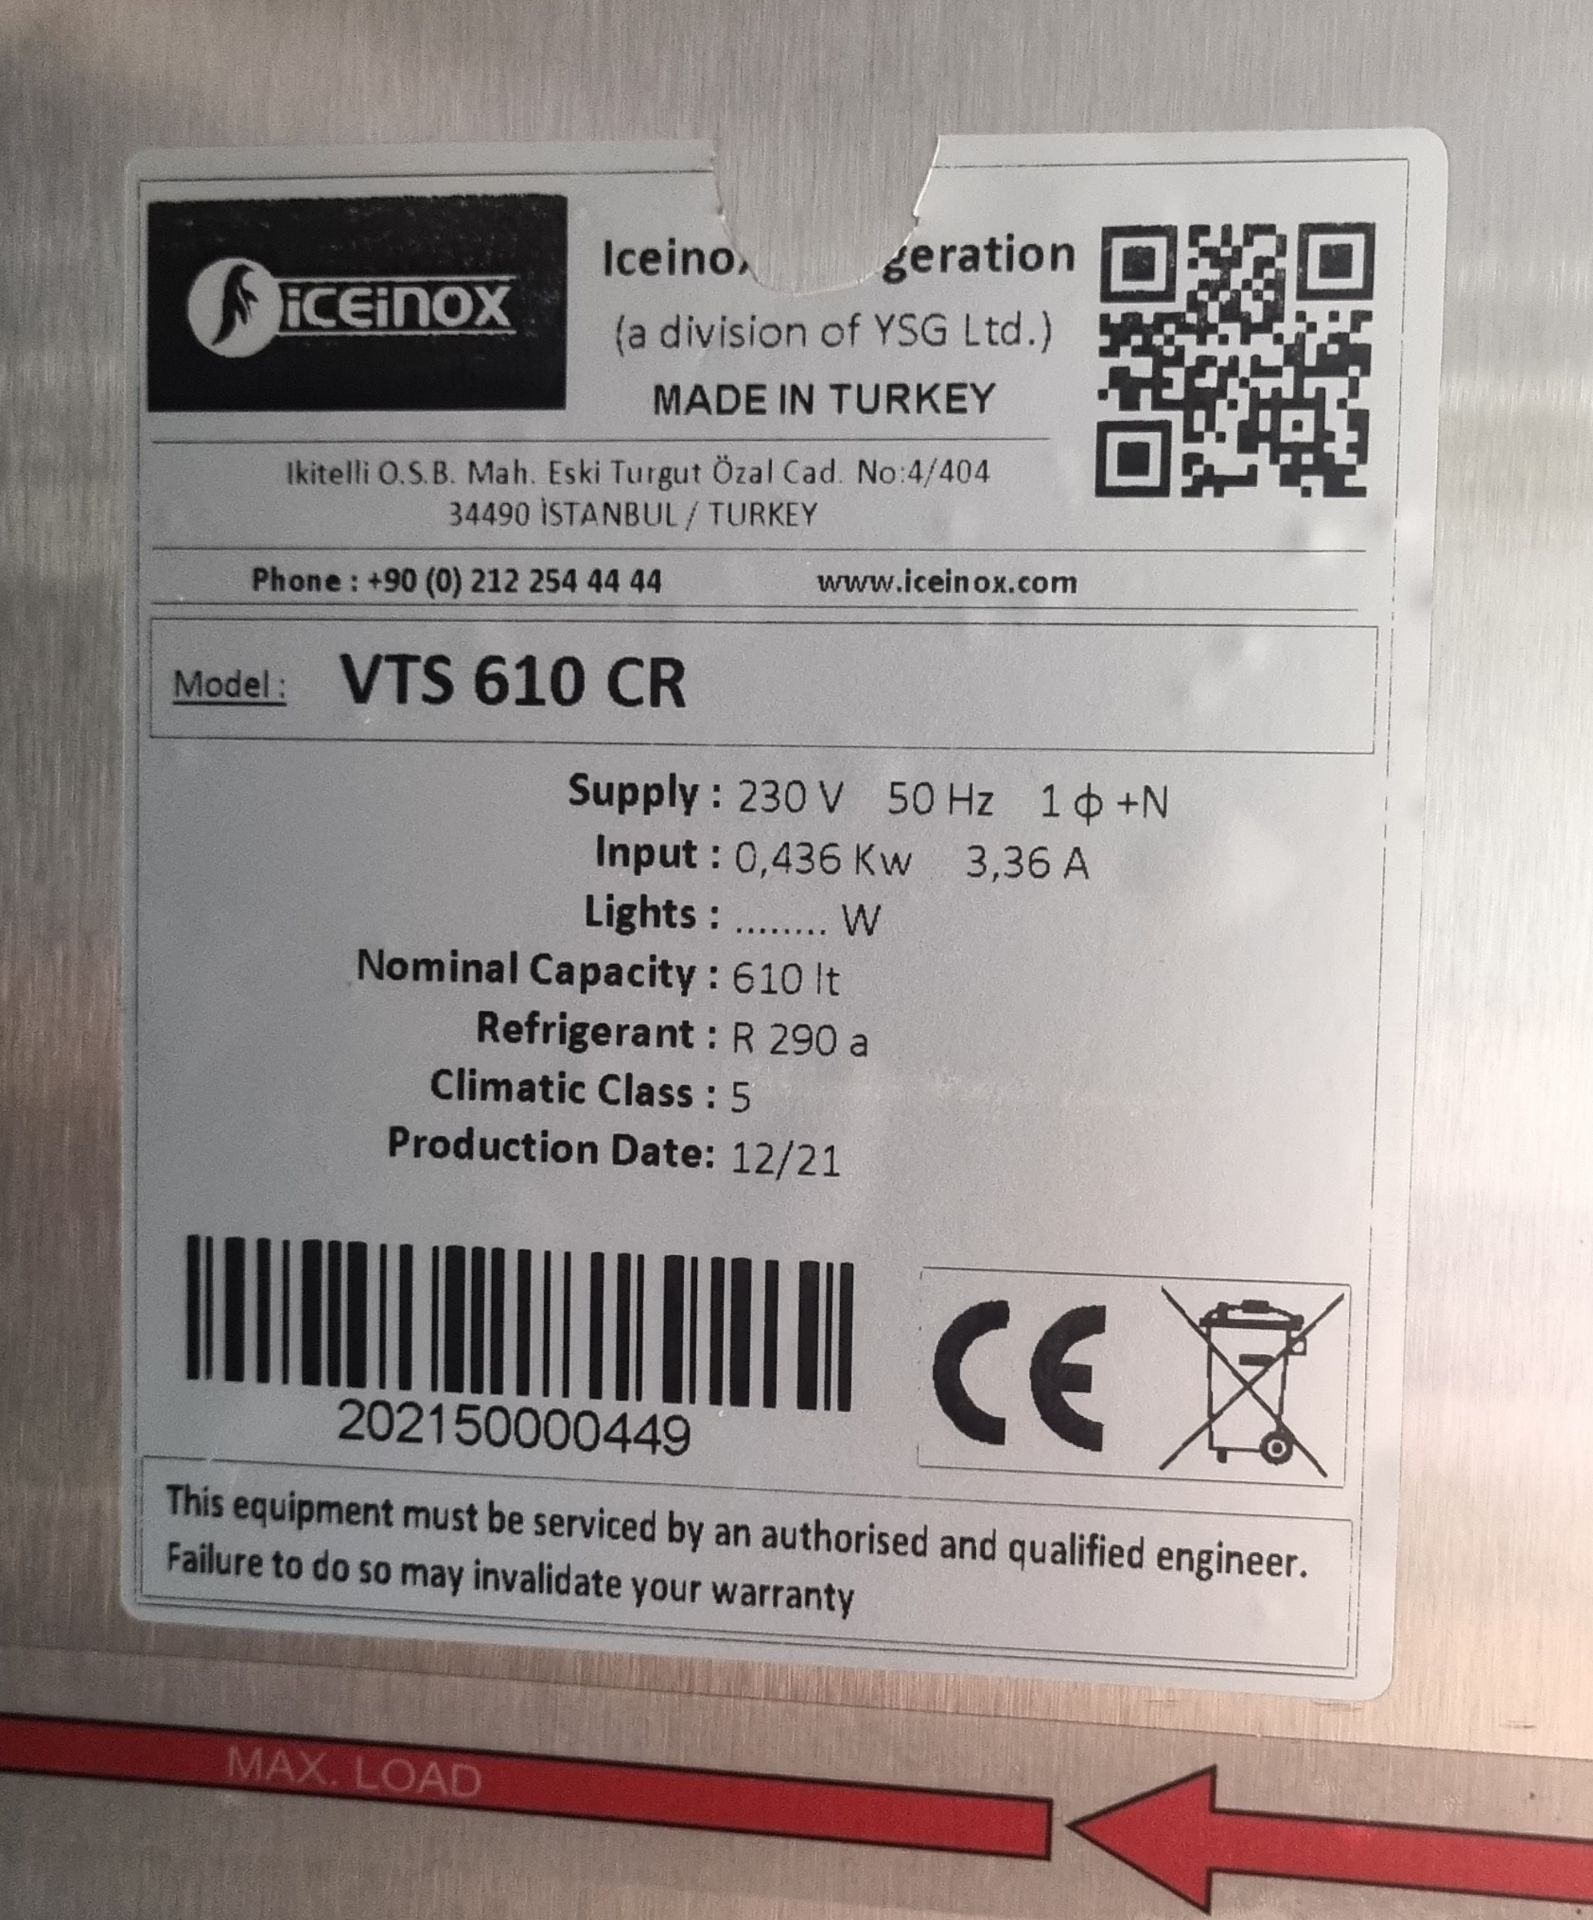 Iceinox VTS 610 CR stainless steel upright, single door refrigerator - Image 3 of 10